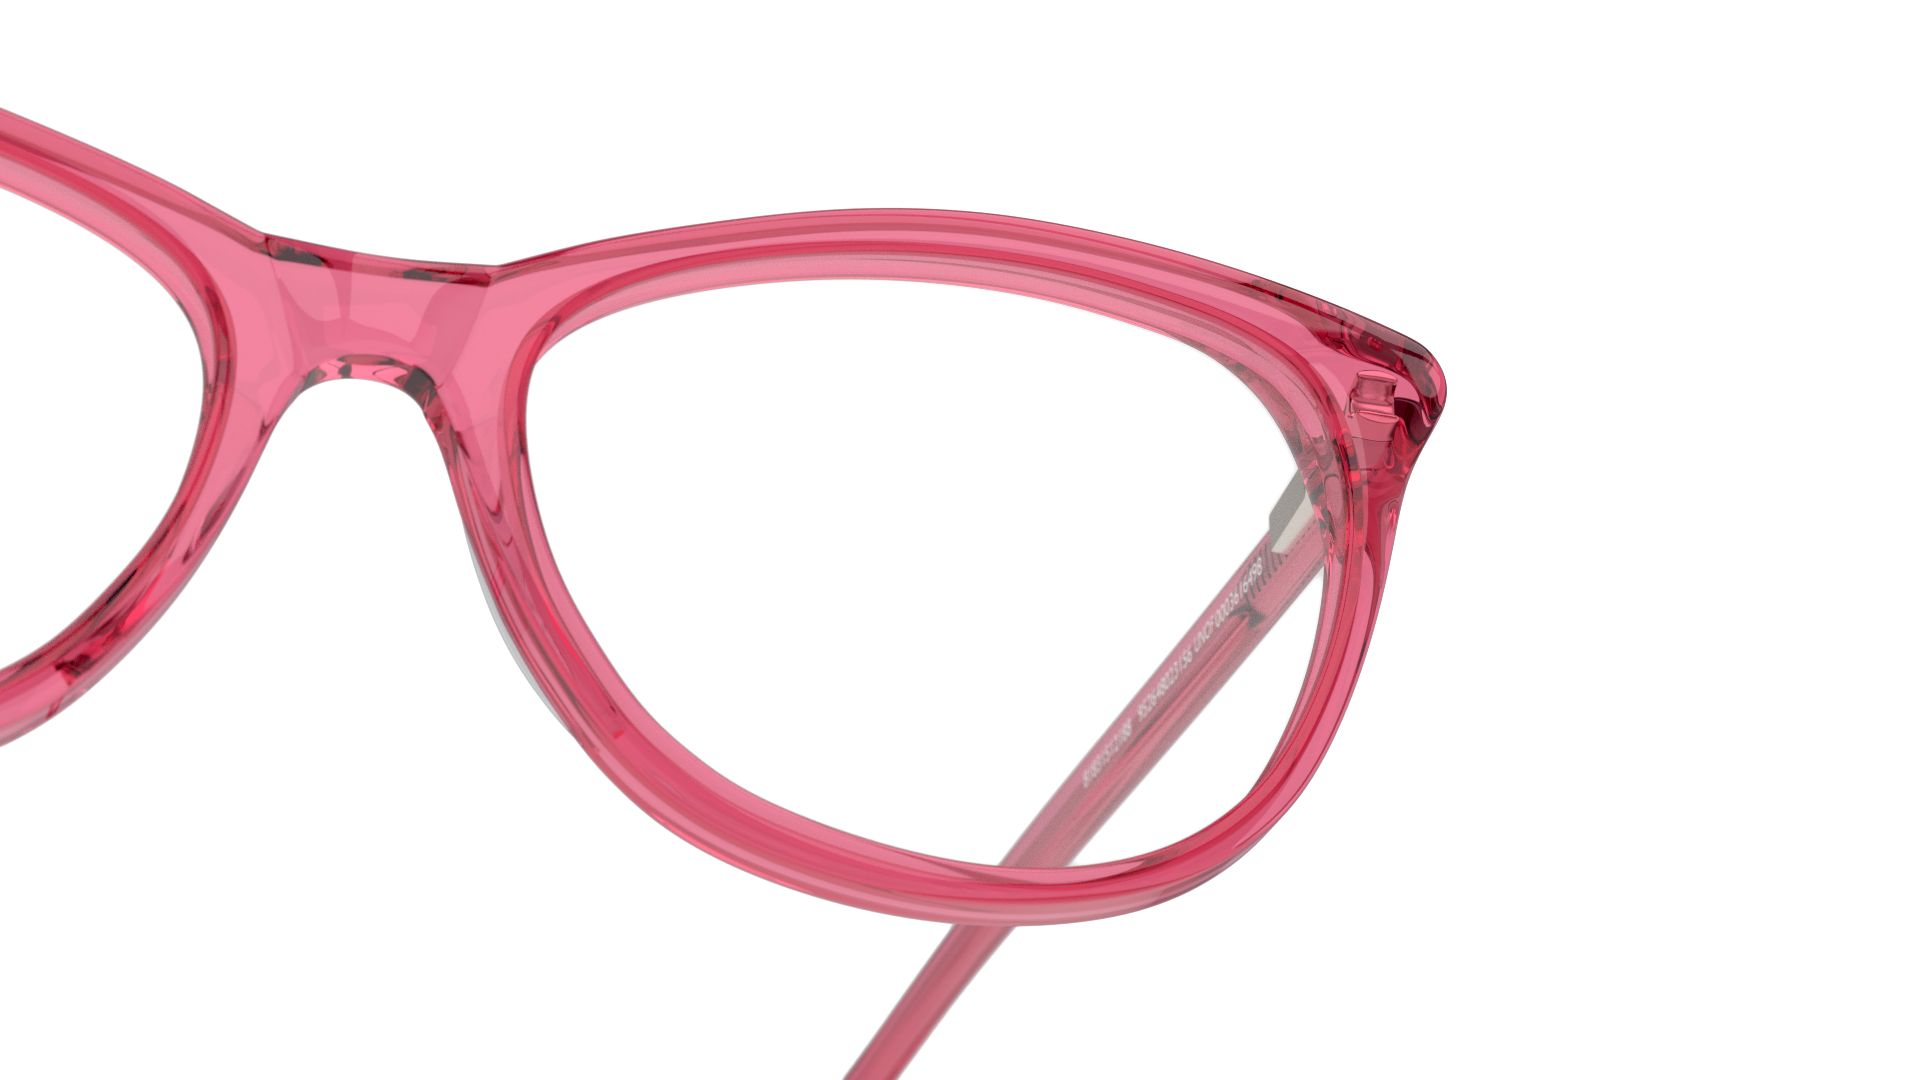 Detail01 Unofficial UNOF0003 Glasses Transparent / Transparent, Pink